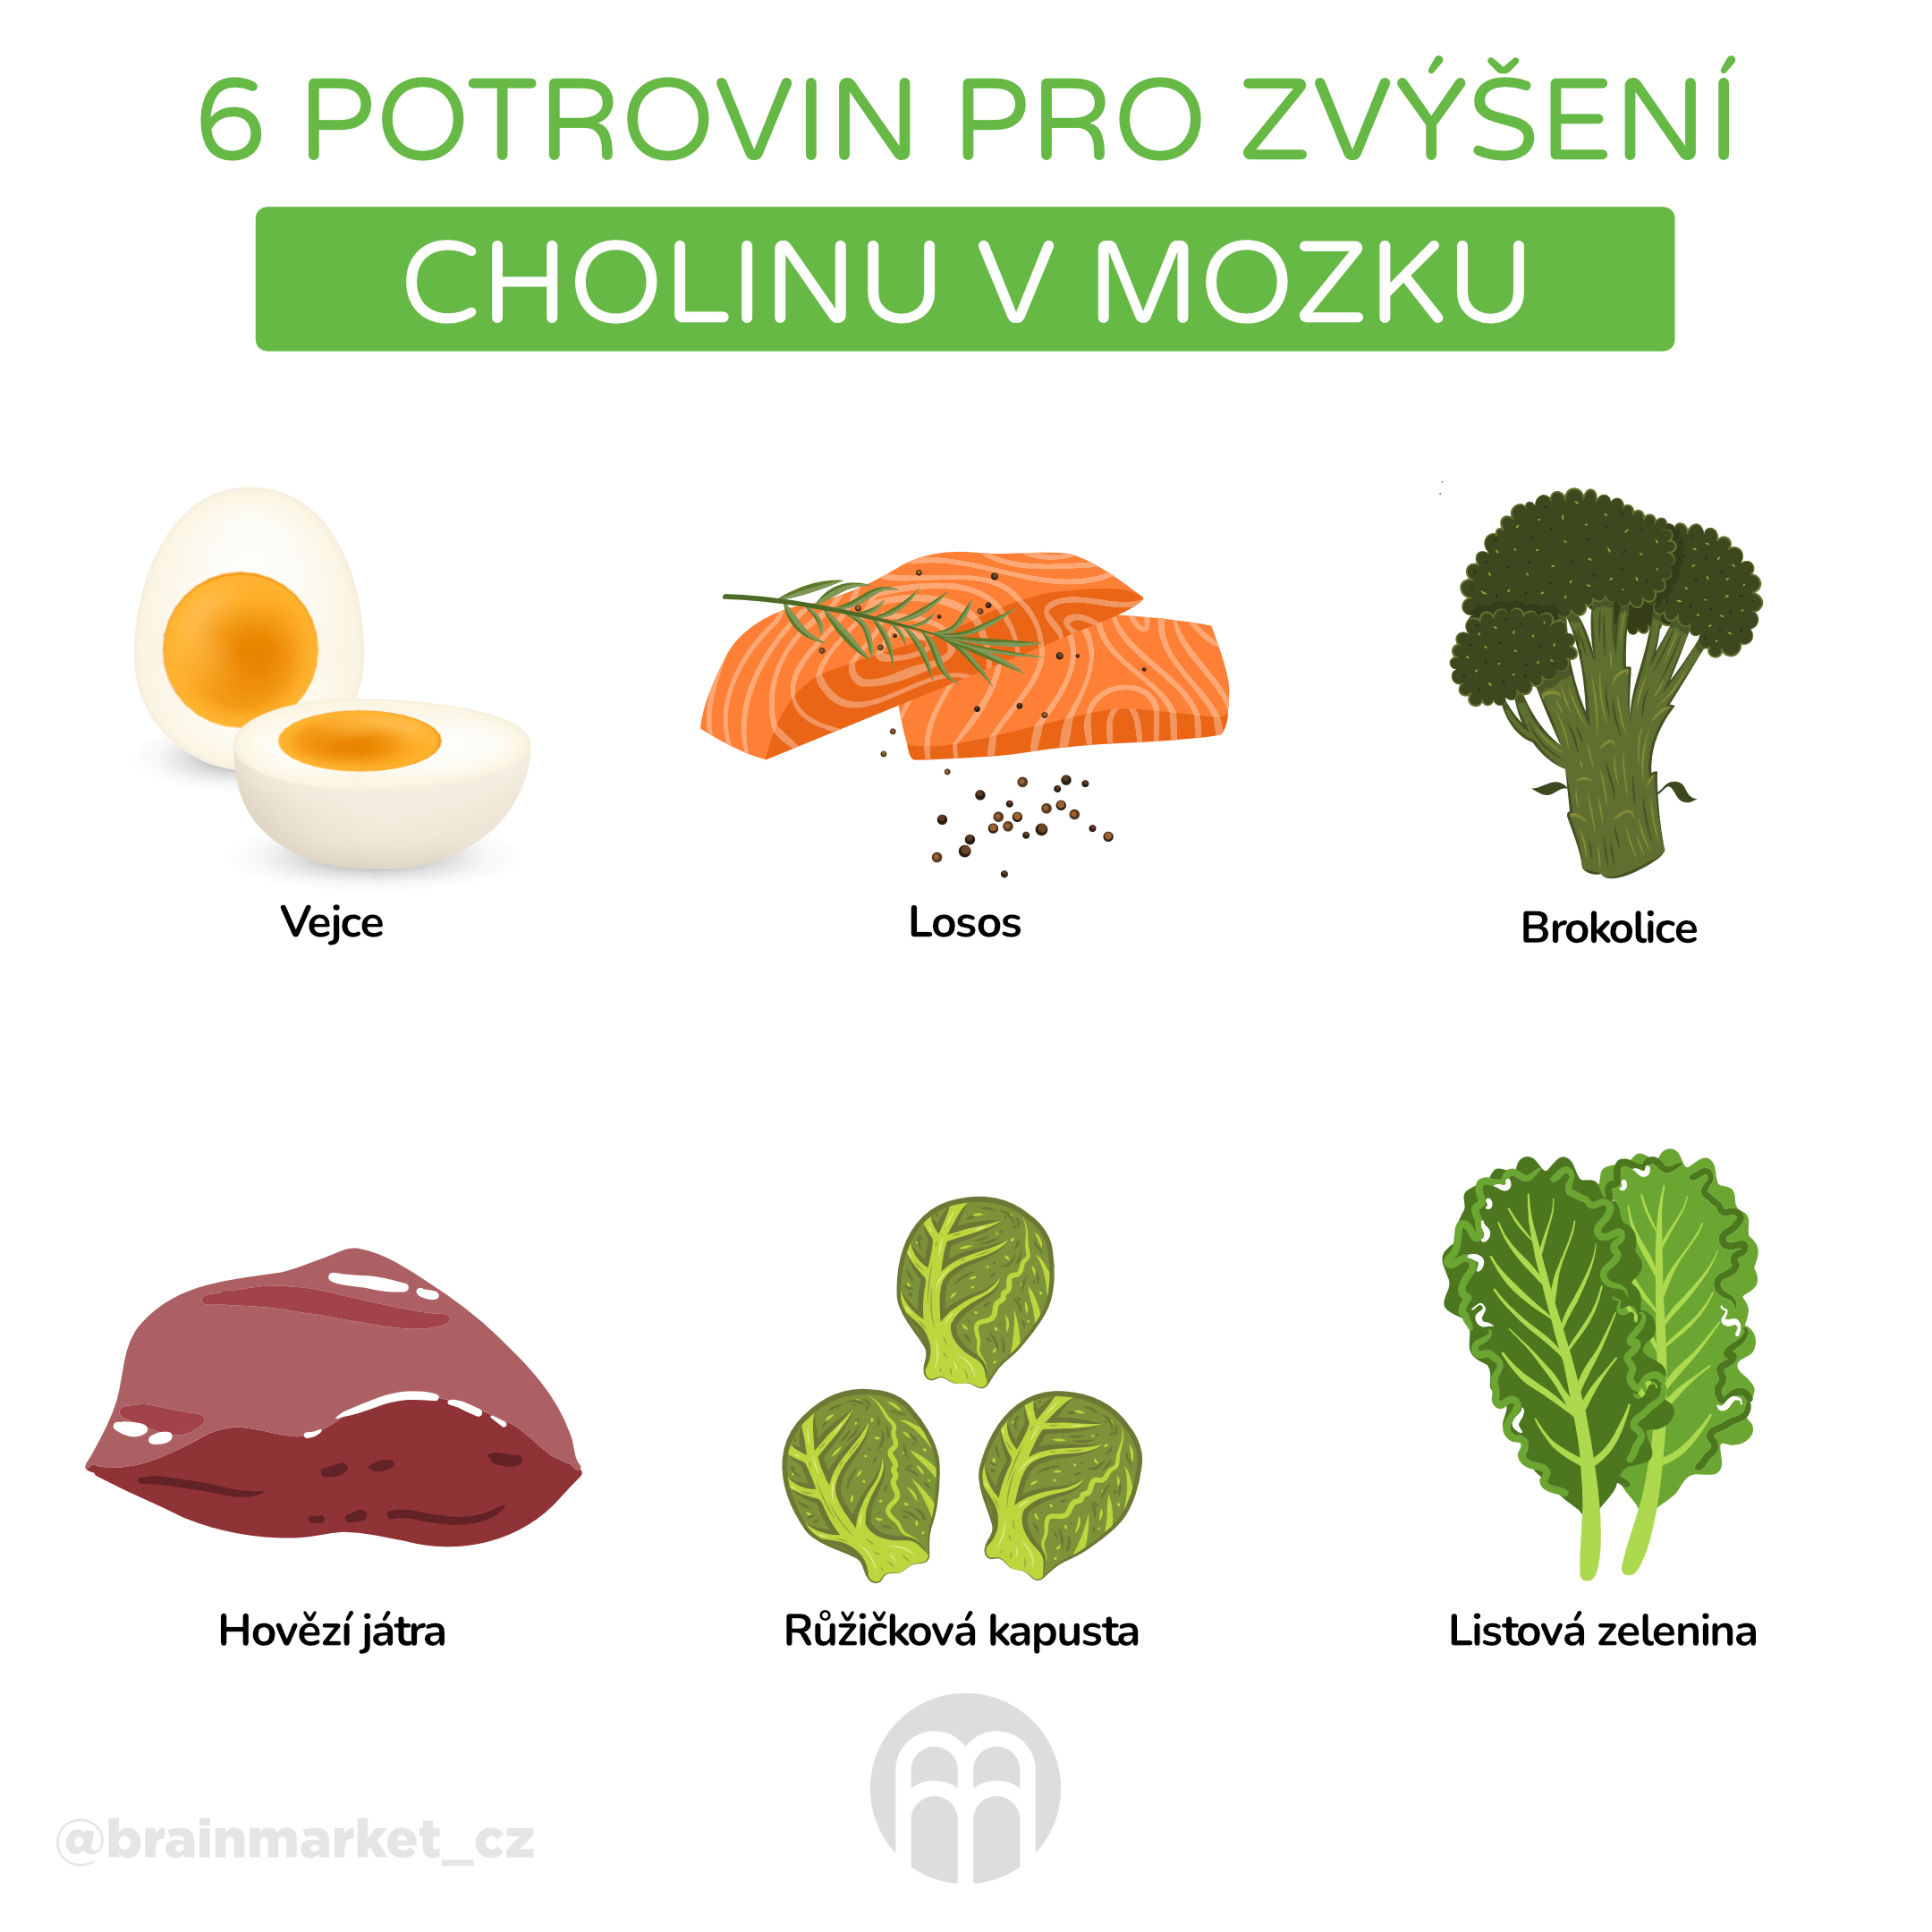 6 potravin pro zvyseni cholinu v mozku_infografika_cz (1)